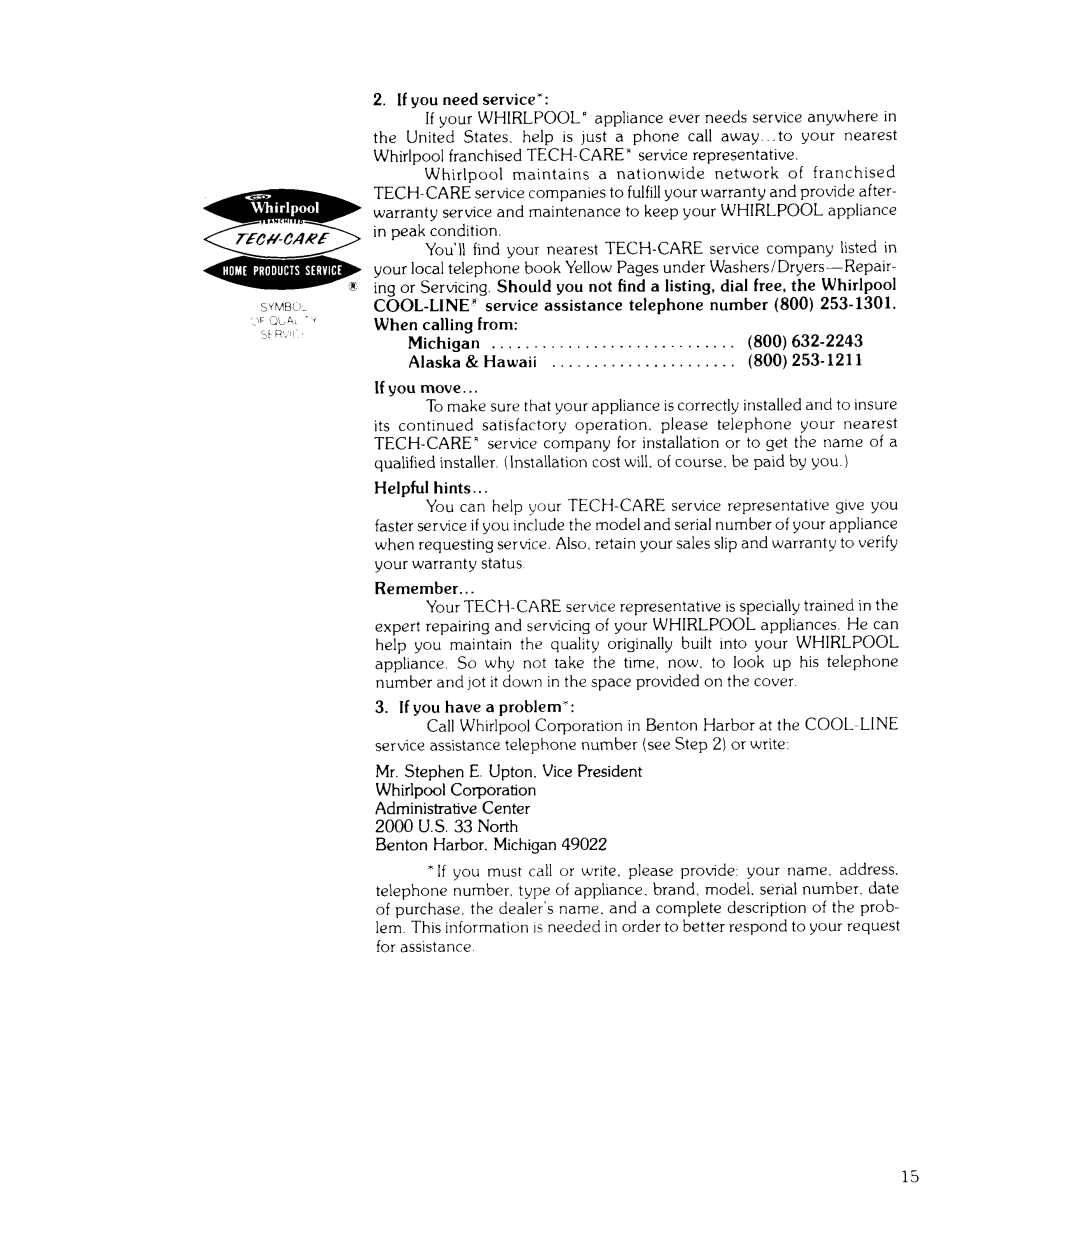 Whirlpool RJE-340P manual If you need service’ 